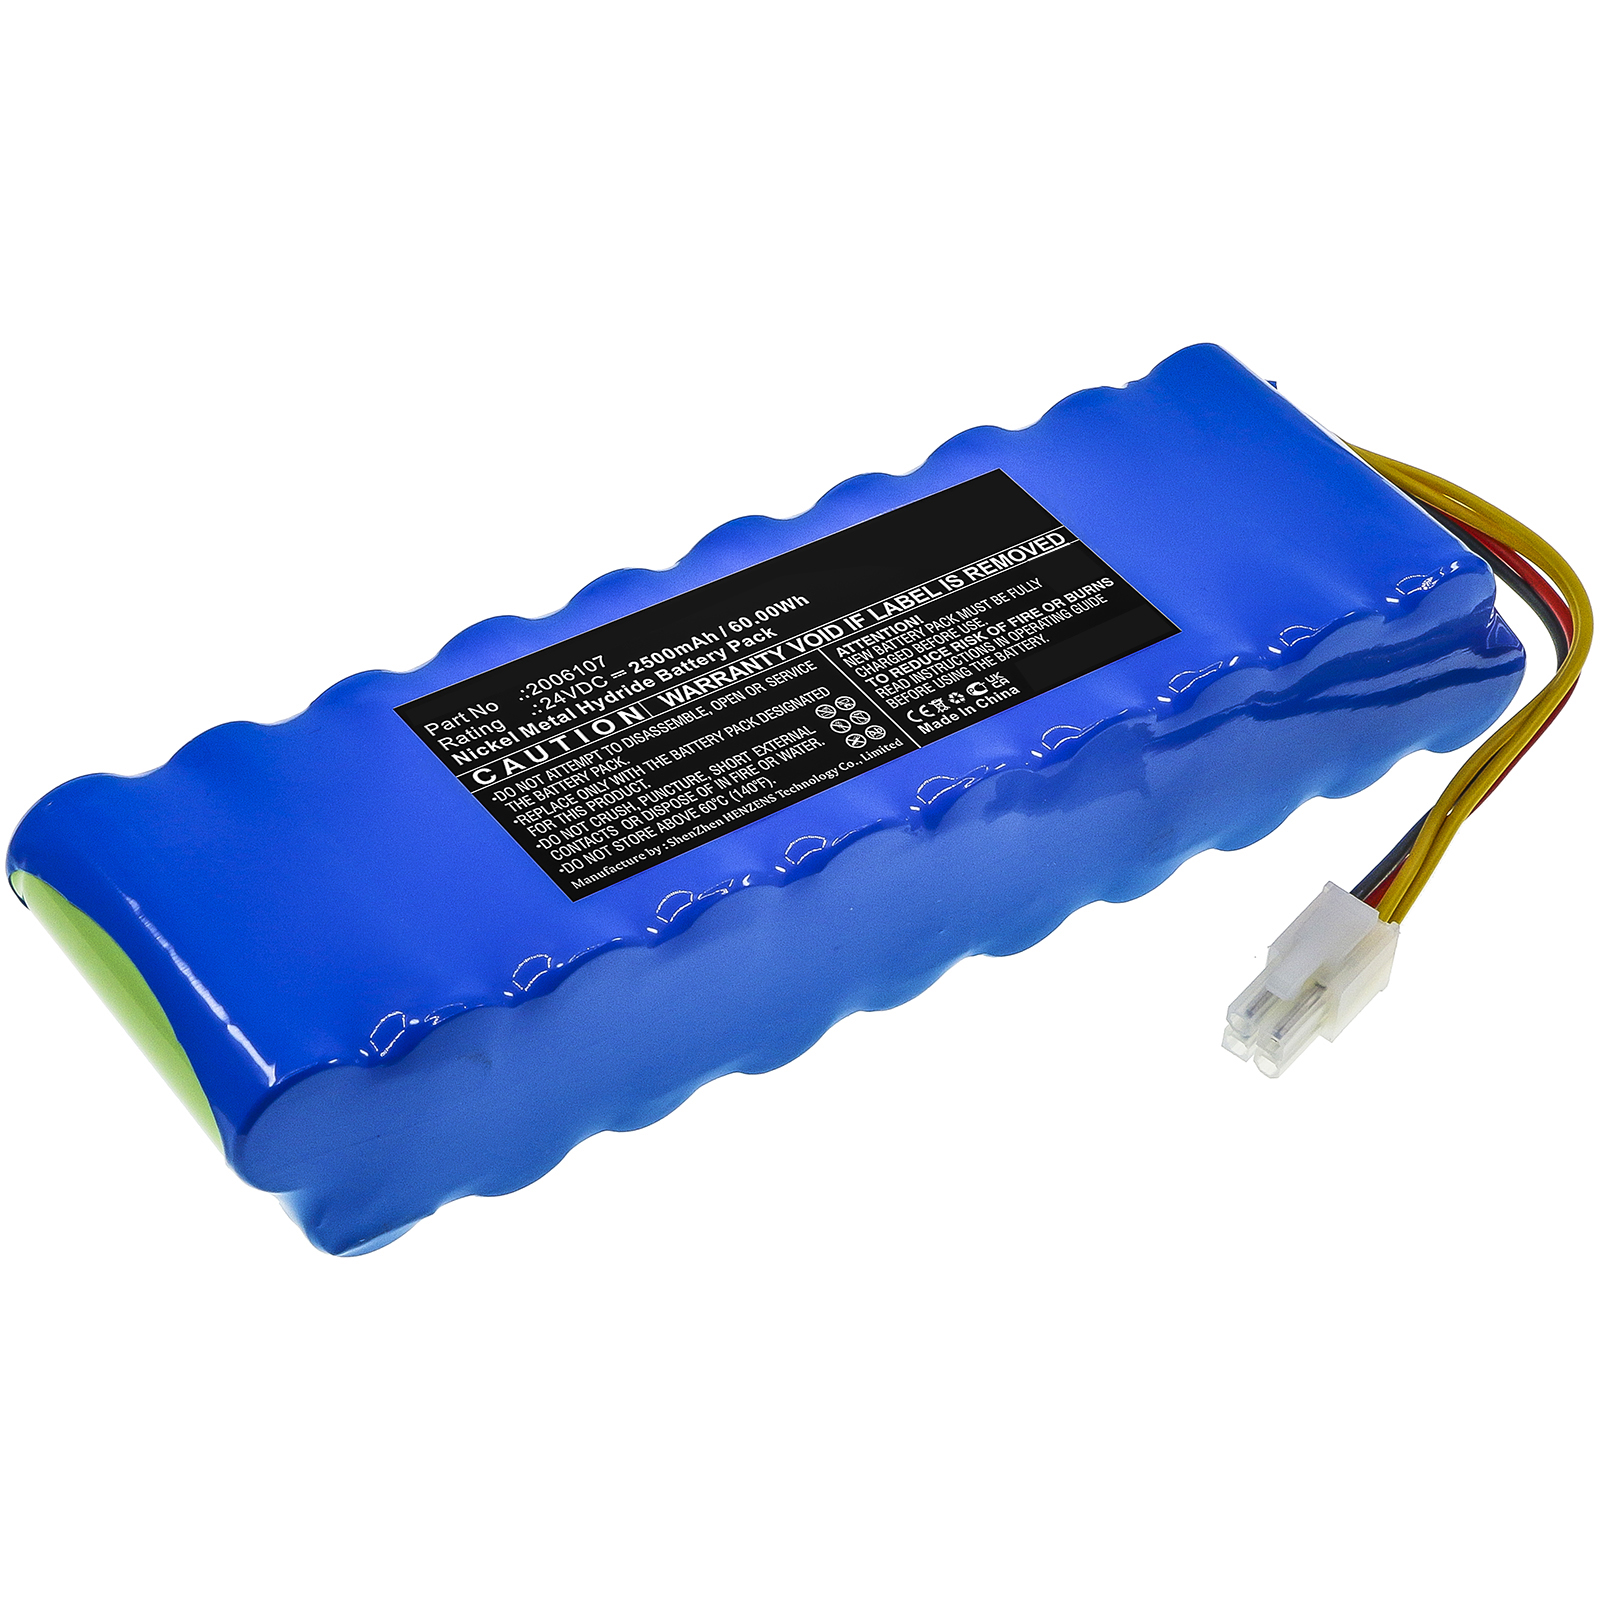 Batteries for LinakMedical